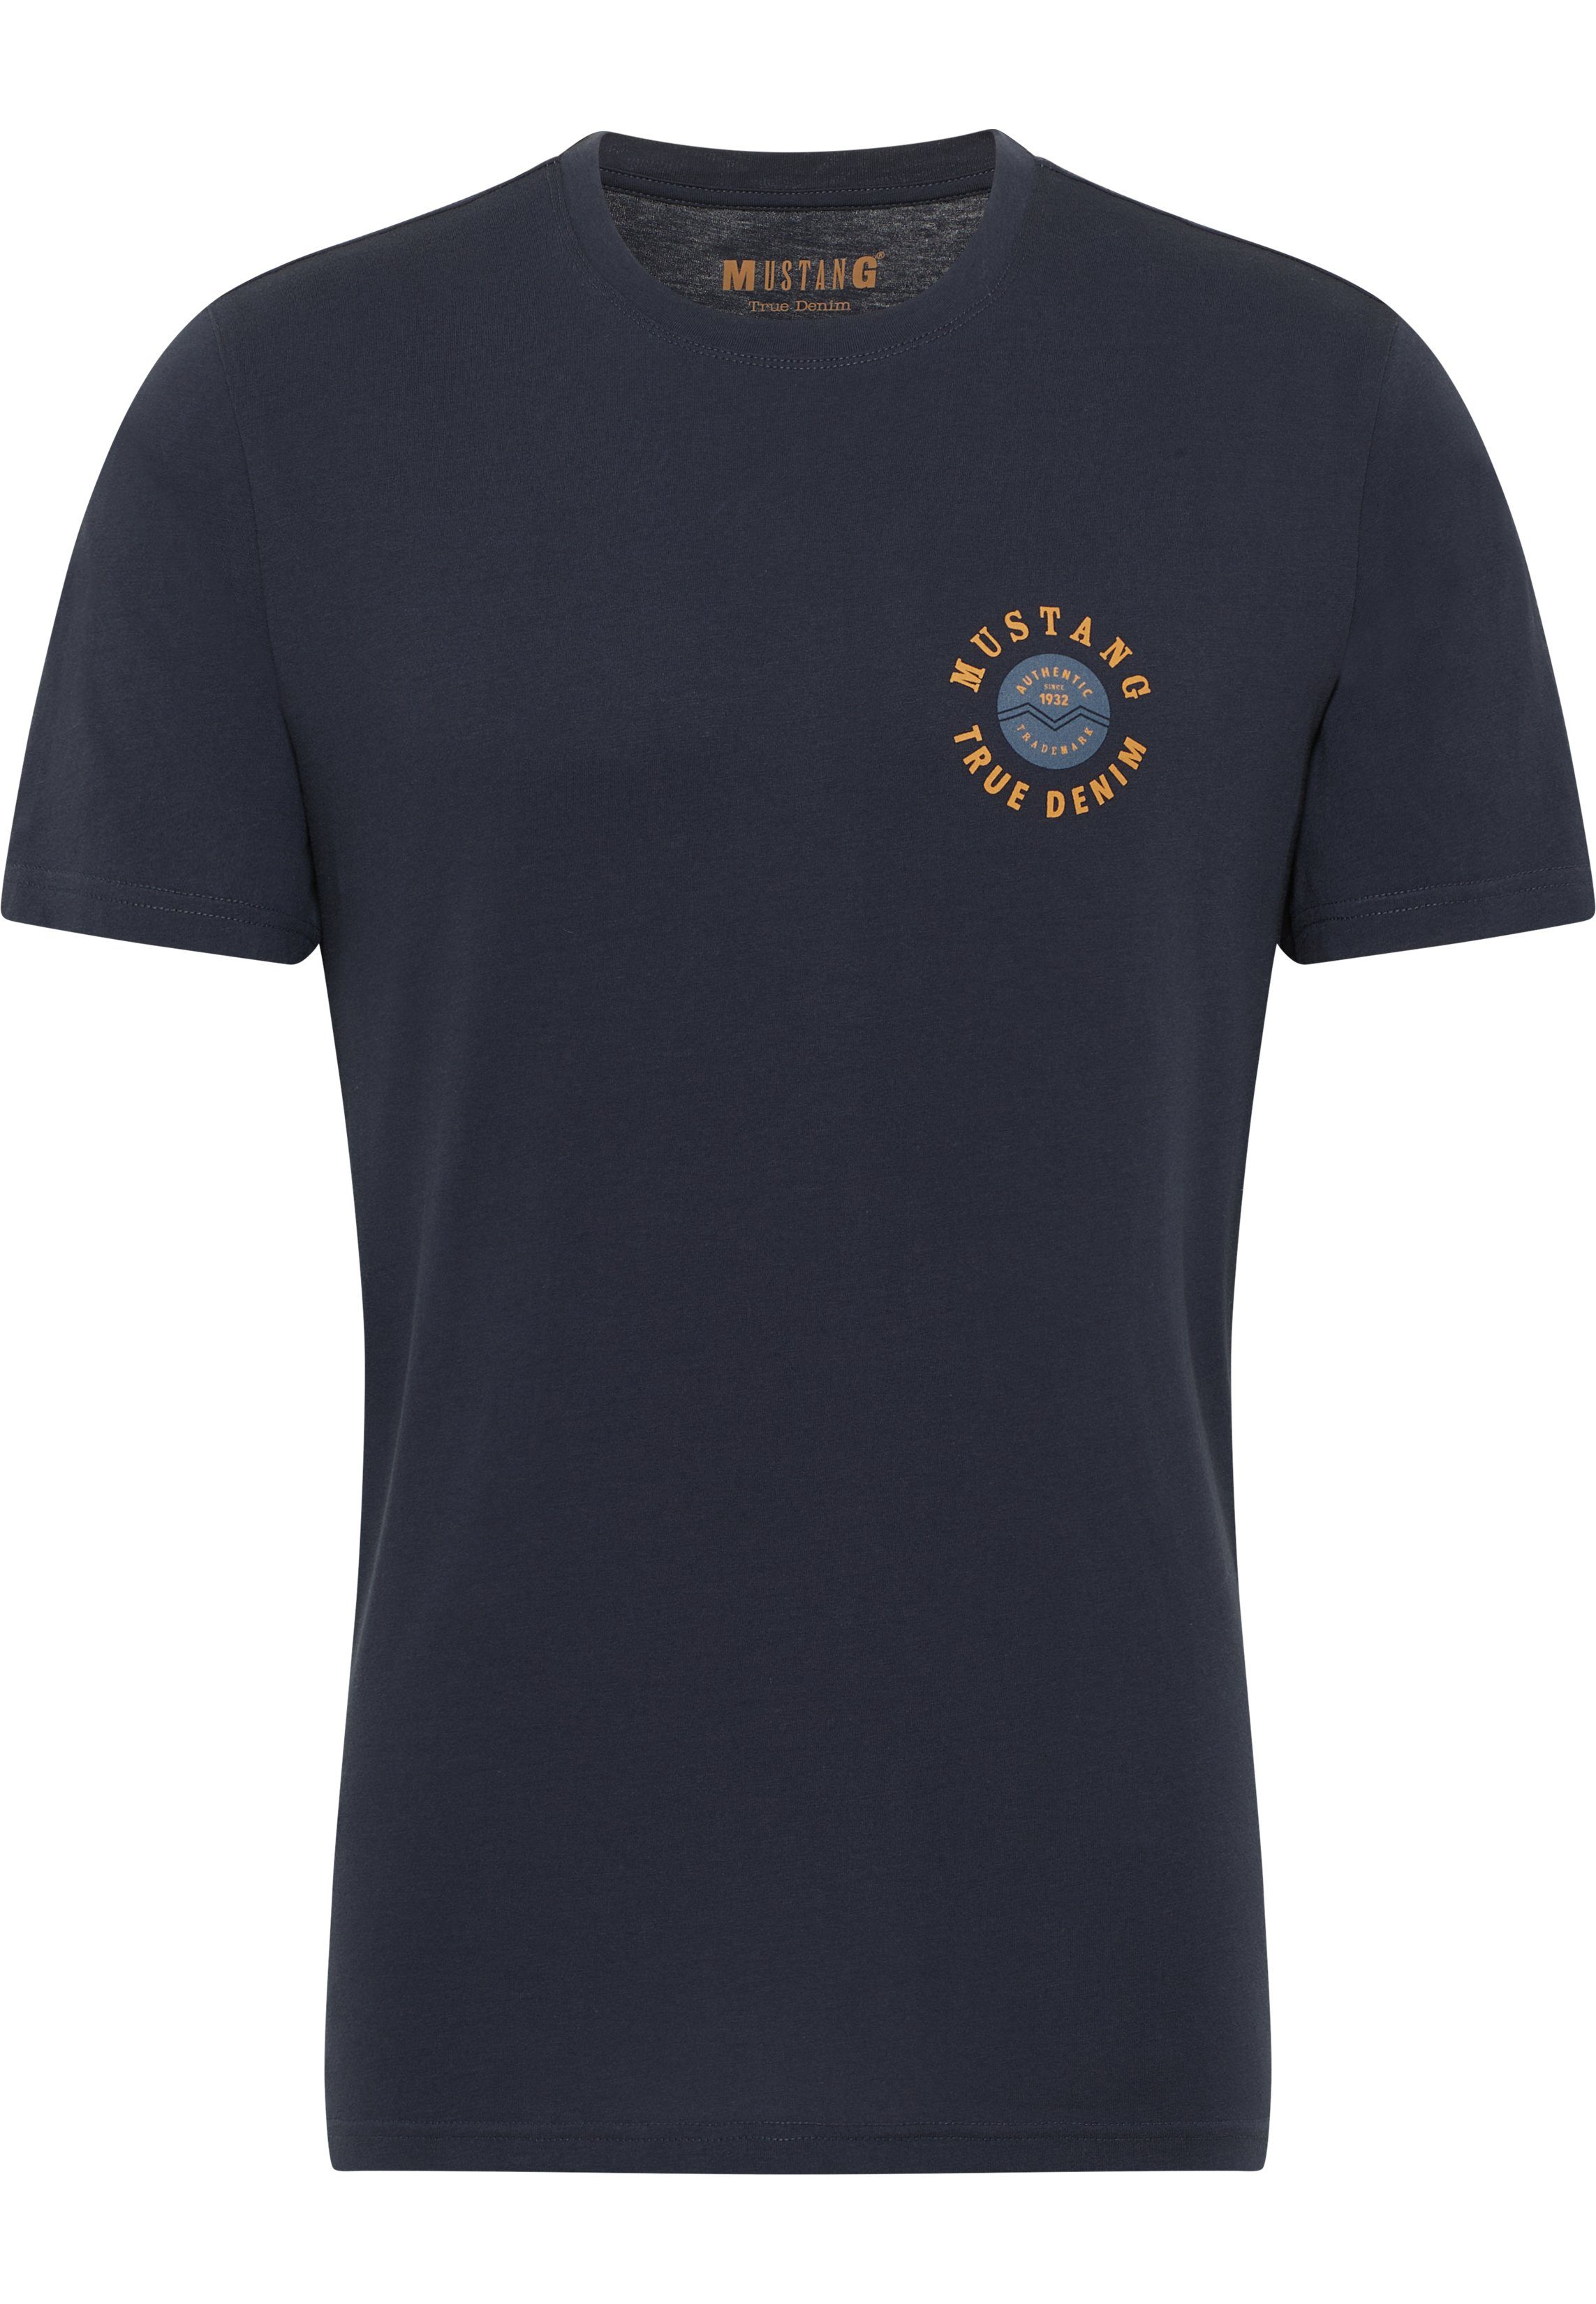 MUSTANG blau C Alex Style T-Shirt Print